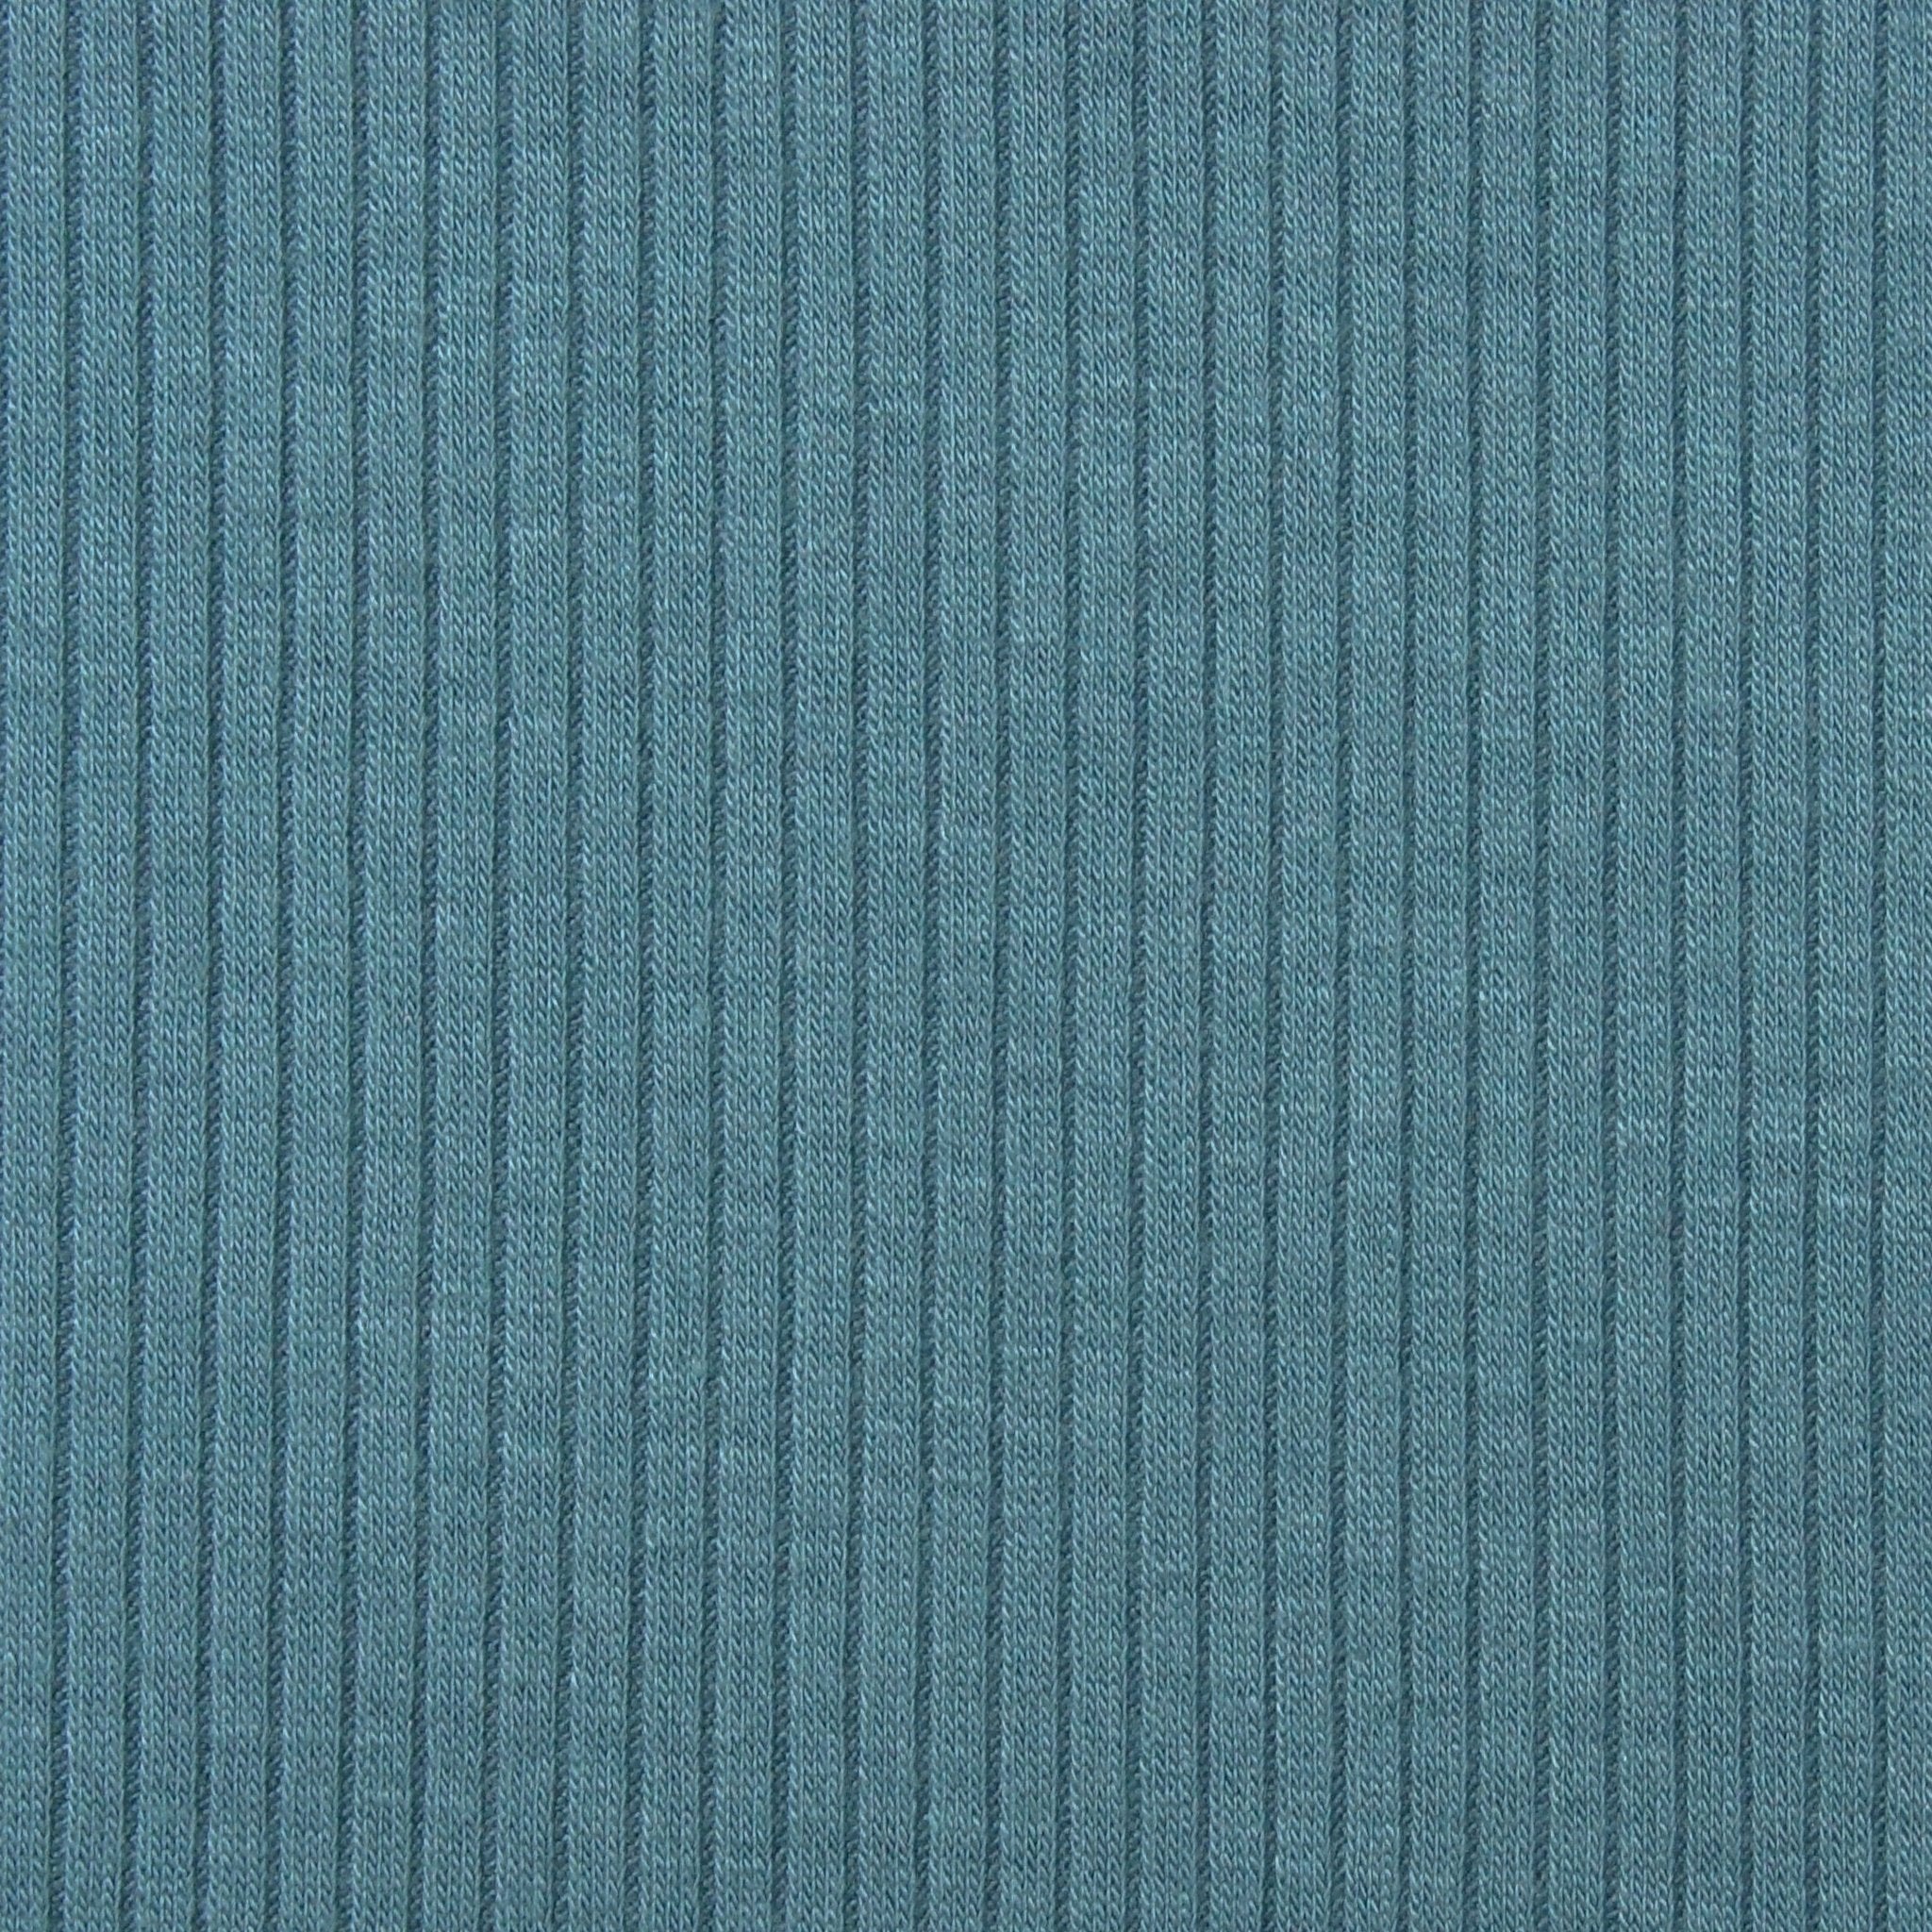 Tencel Modal Spandex Ribbed Knit - Teal Blue